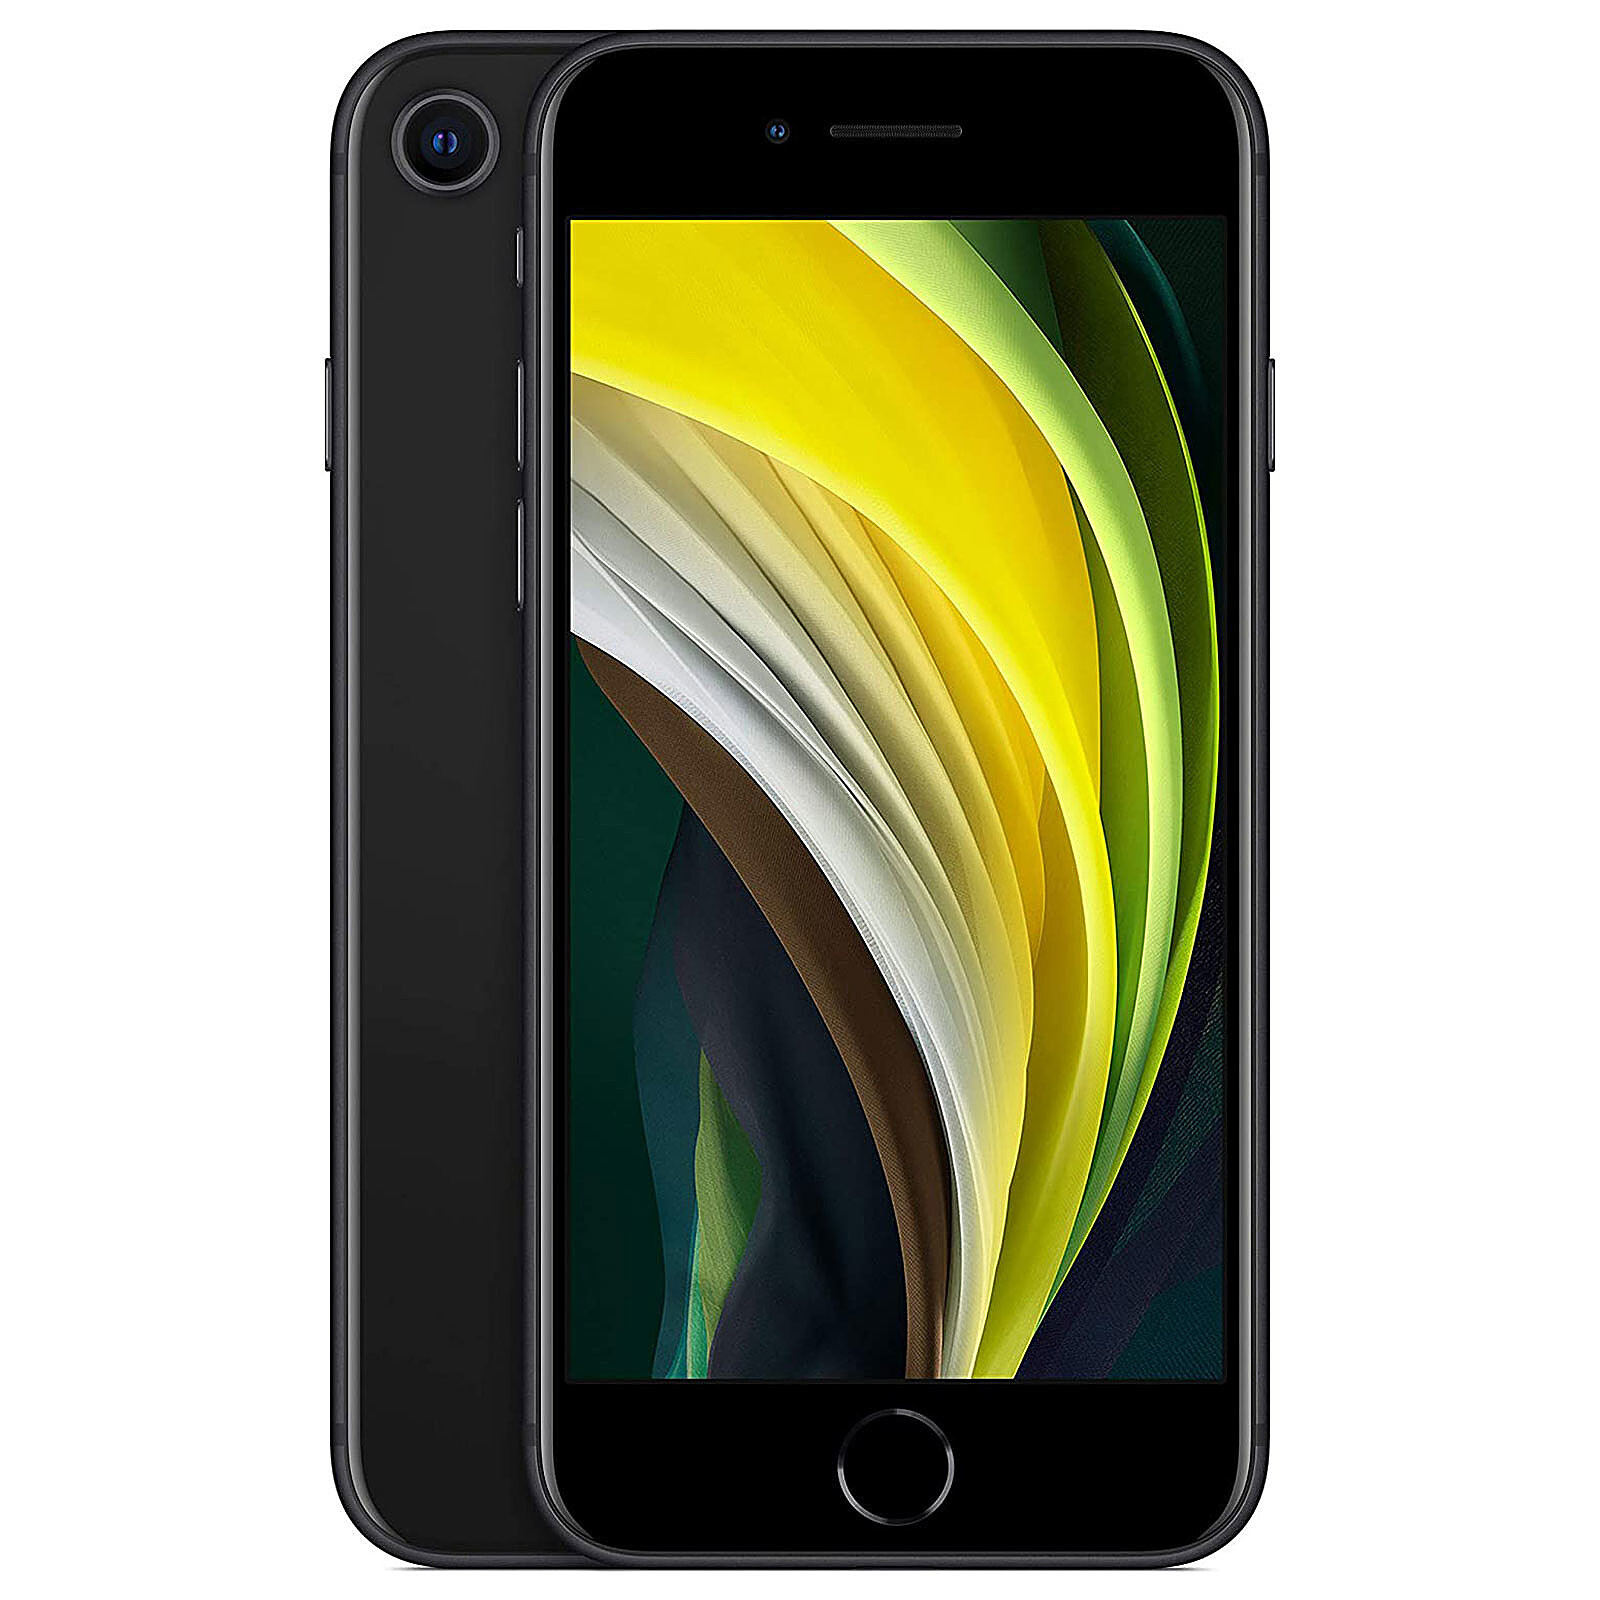 Apple iPhone SE 64GB Black - Mobile phone & smartphone - LDLC 3-year  warranty